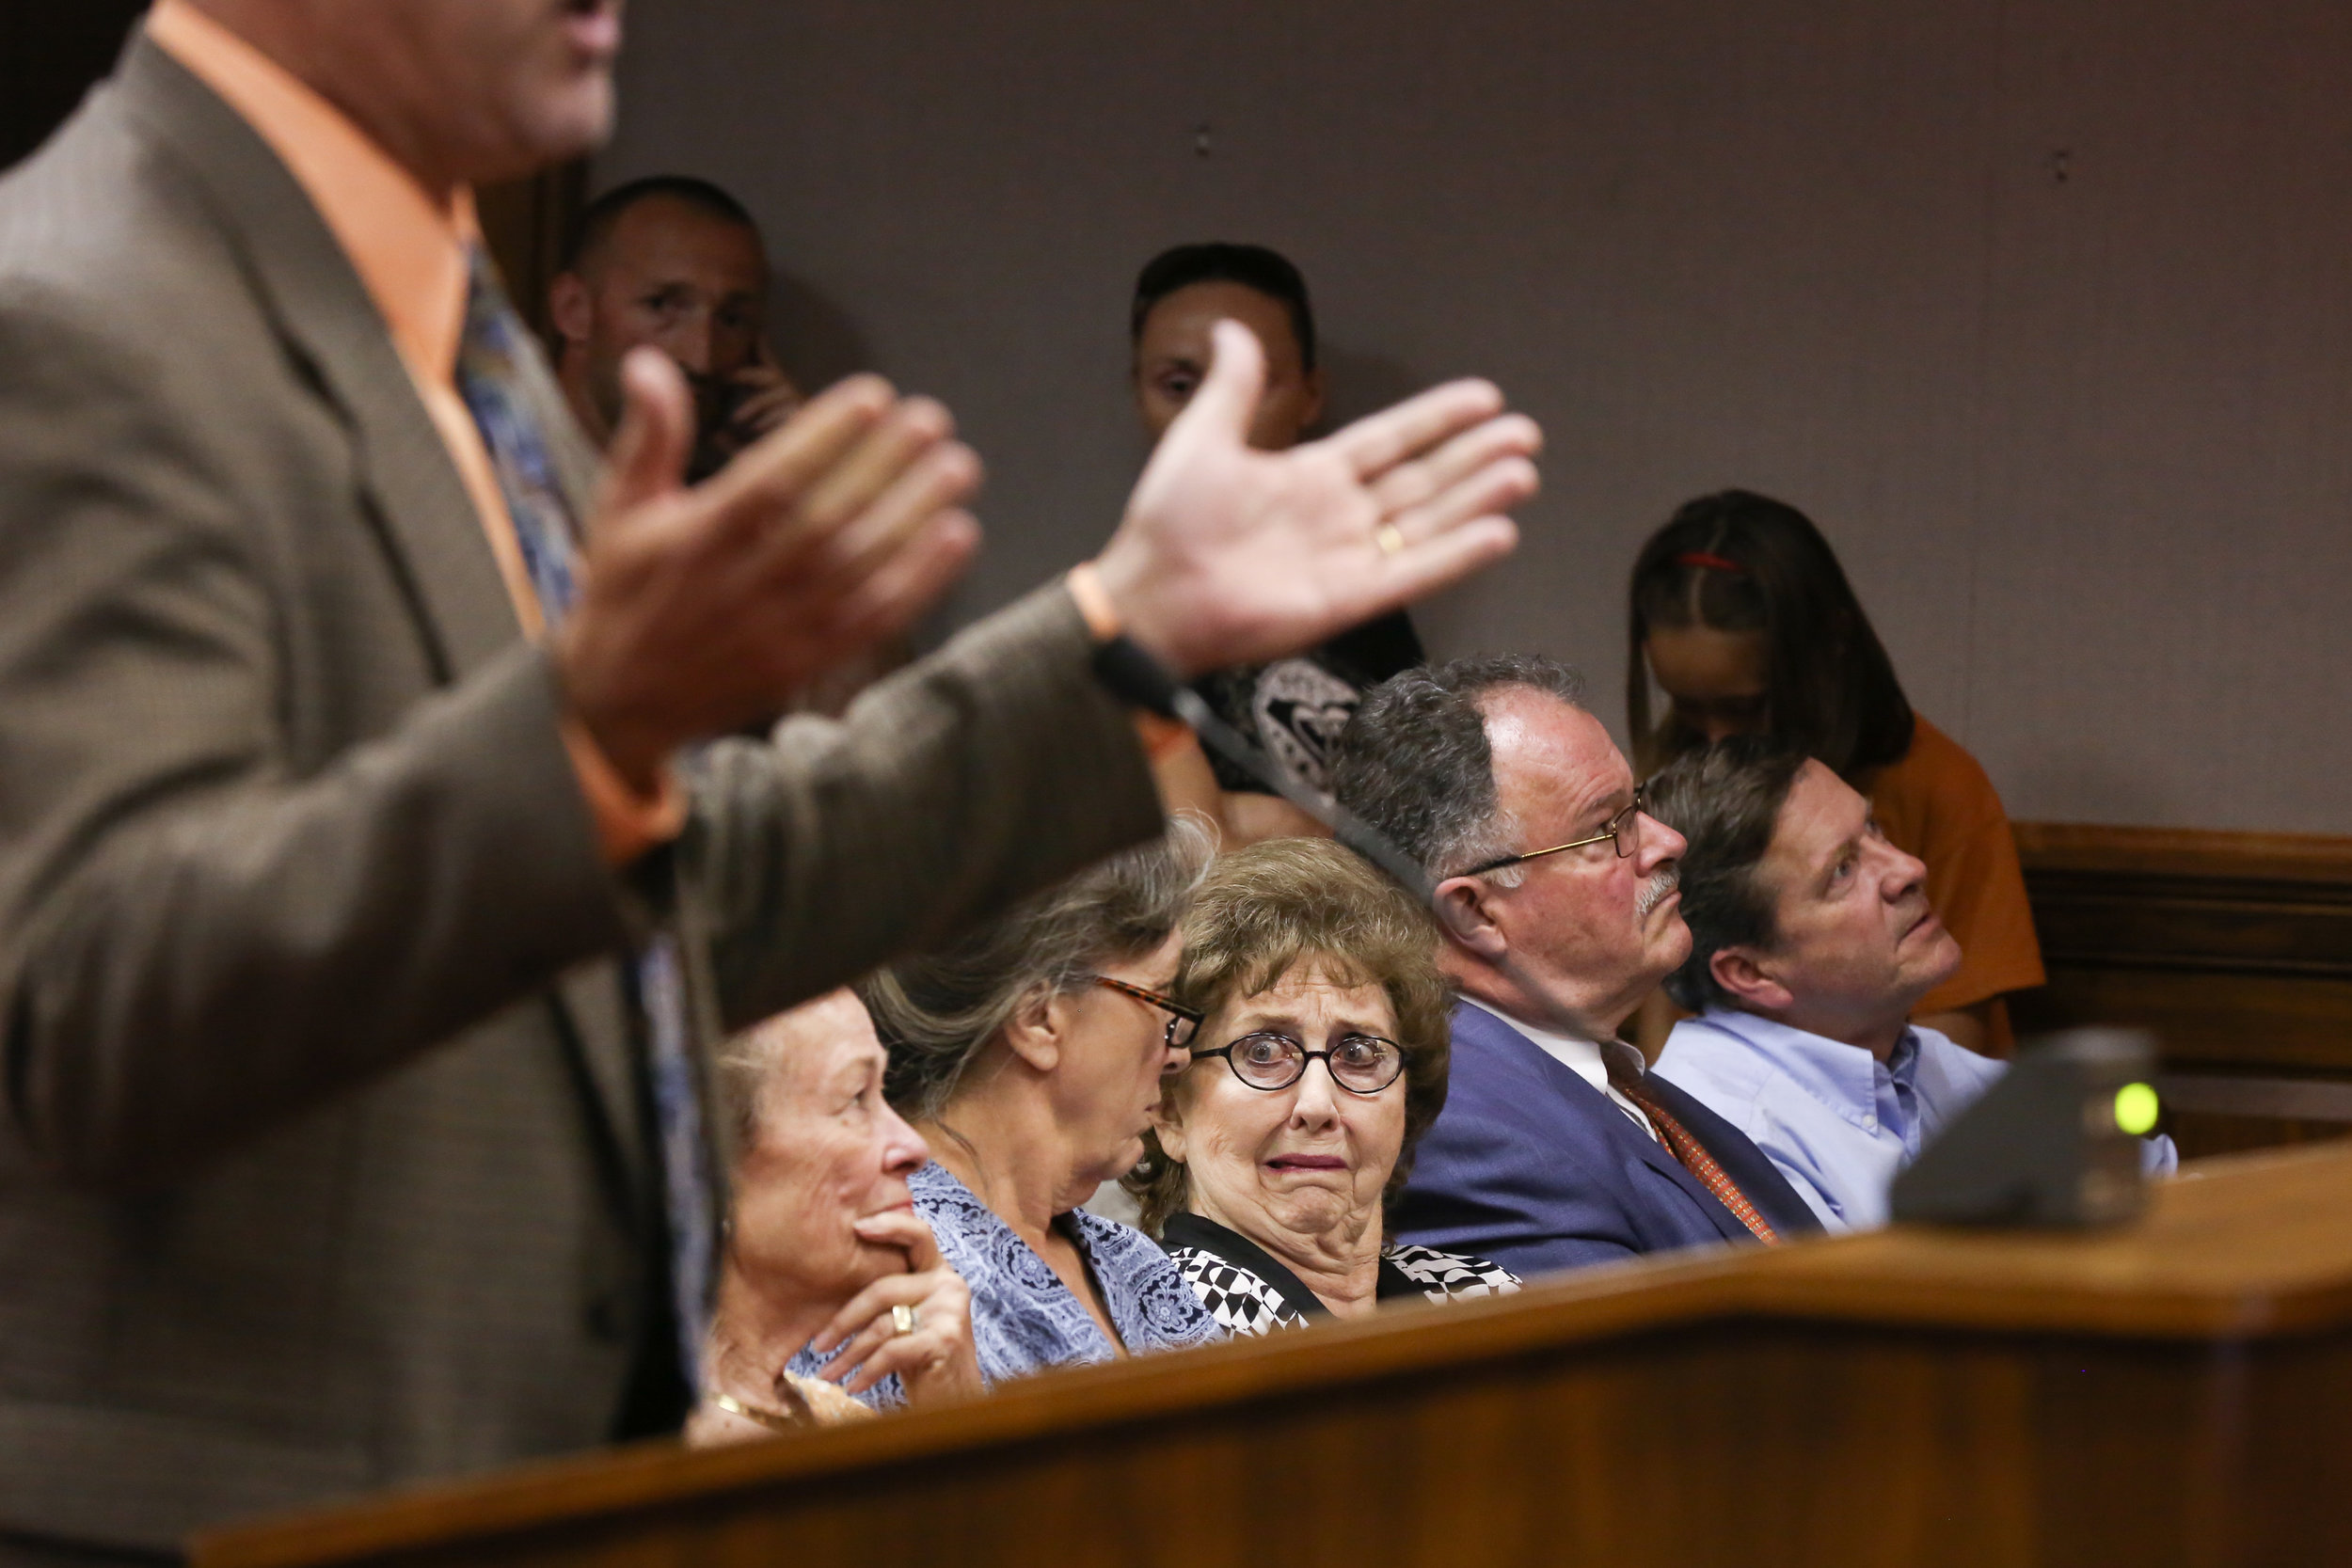  Raceway opponent Joyce Ackerman reacts to supporter Edwin Purdue during a public hearing in Spotsylvania County 